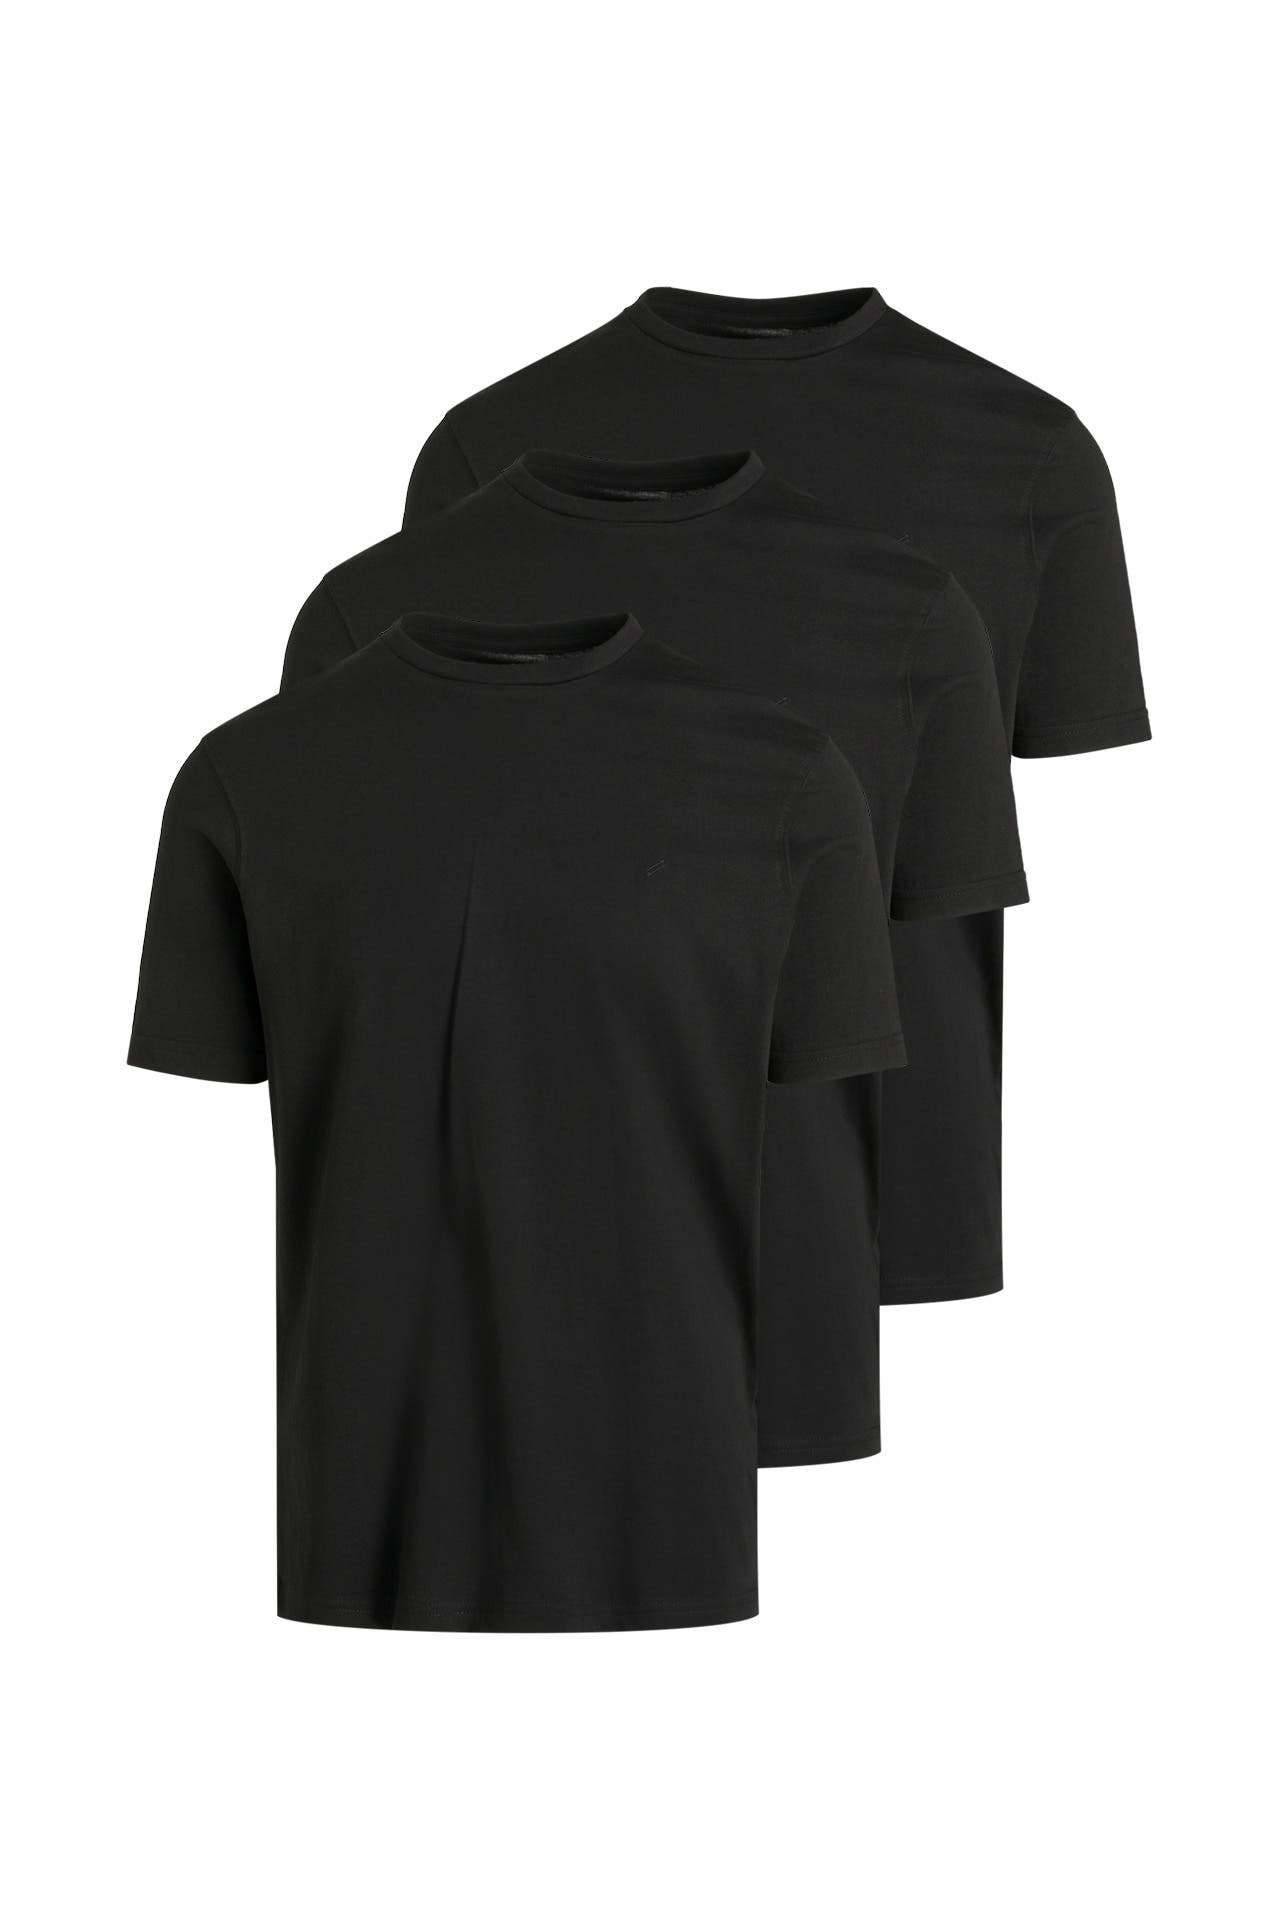 Paris Outletcity - HECHTER günstig T-Shirts | schwarz kaufen » online 3er-Pack